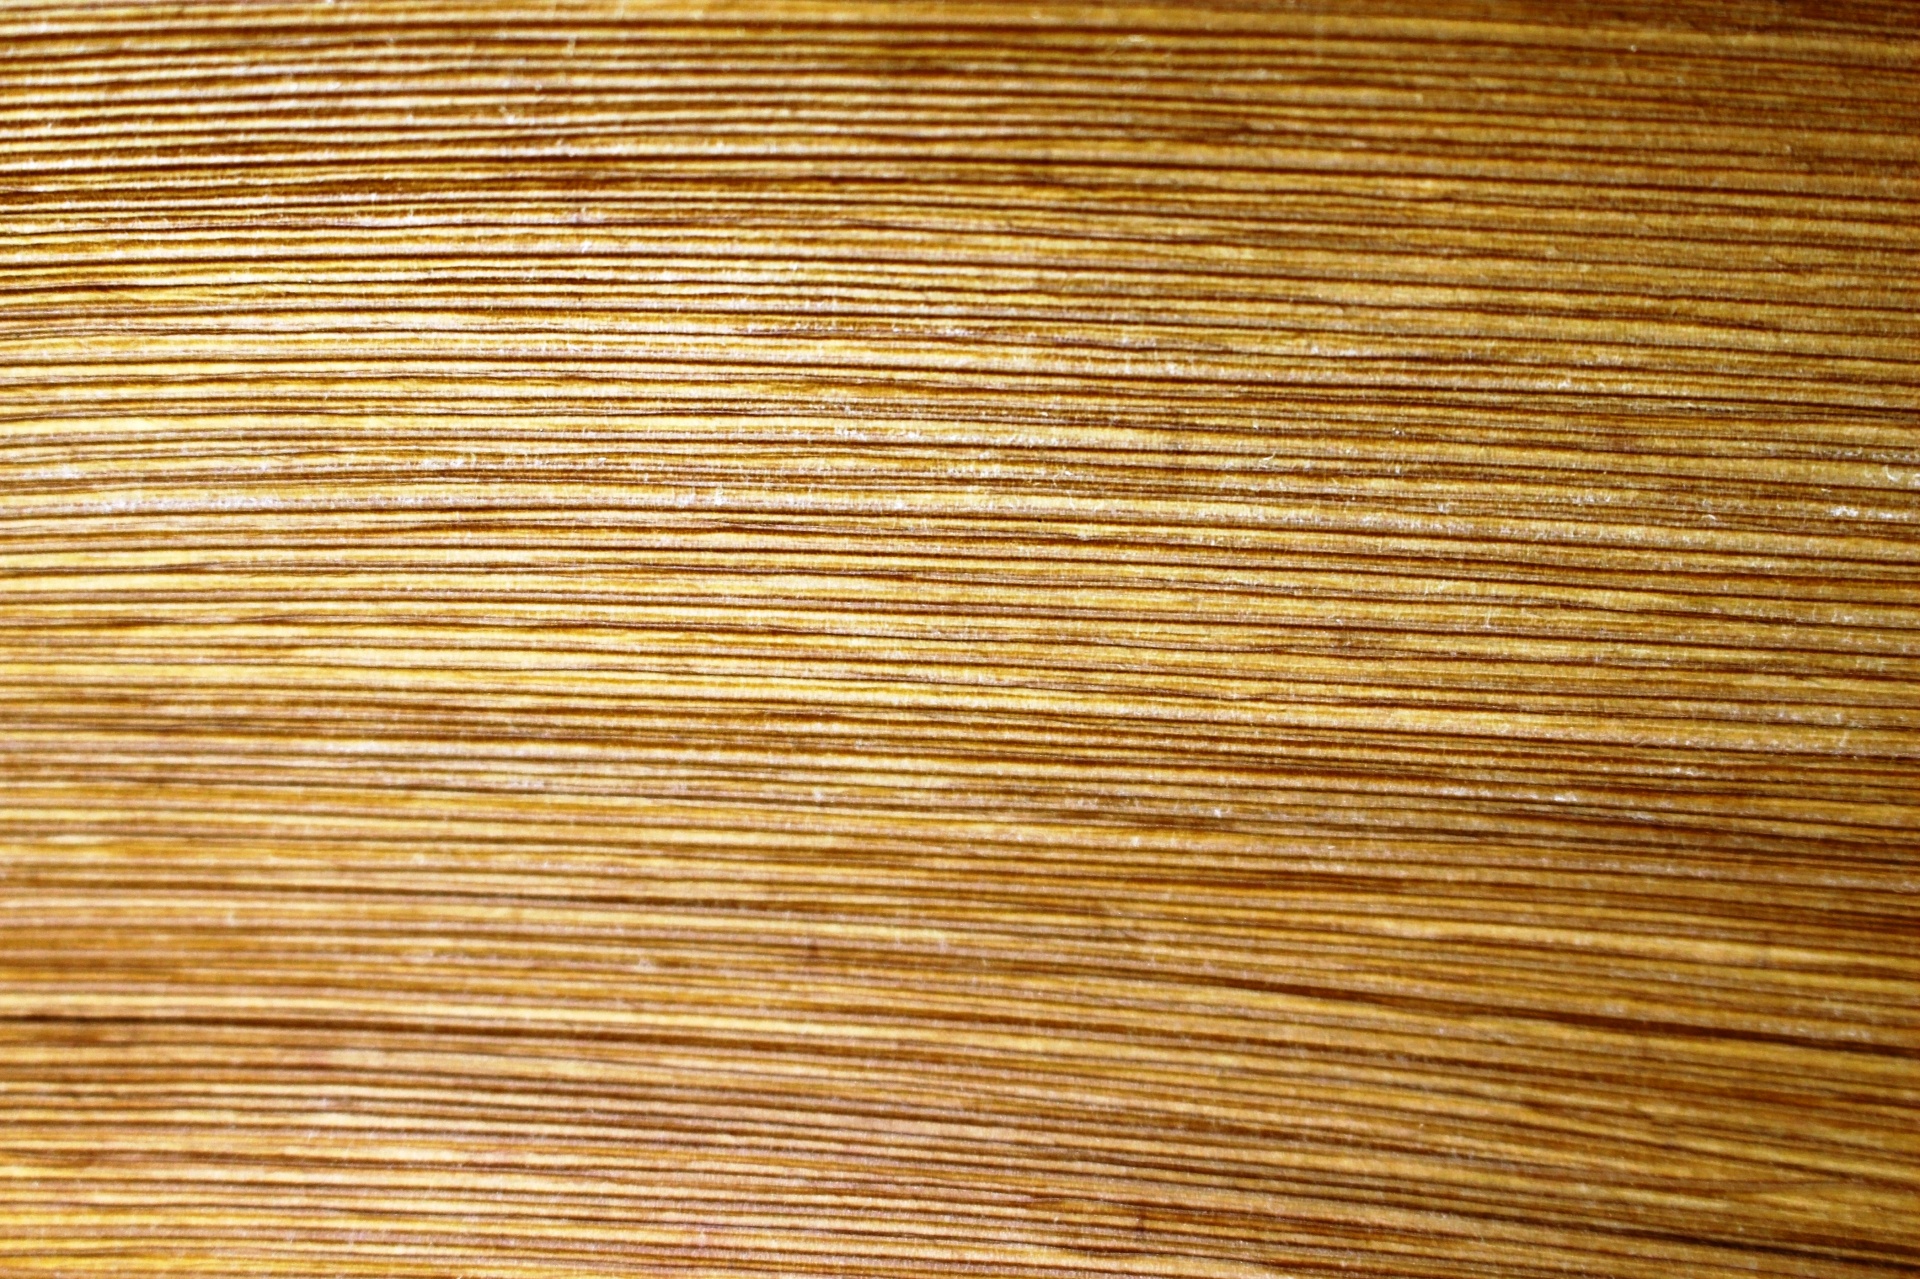 Golden Wood Texture Background